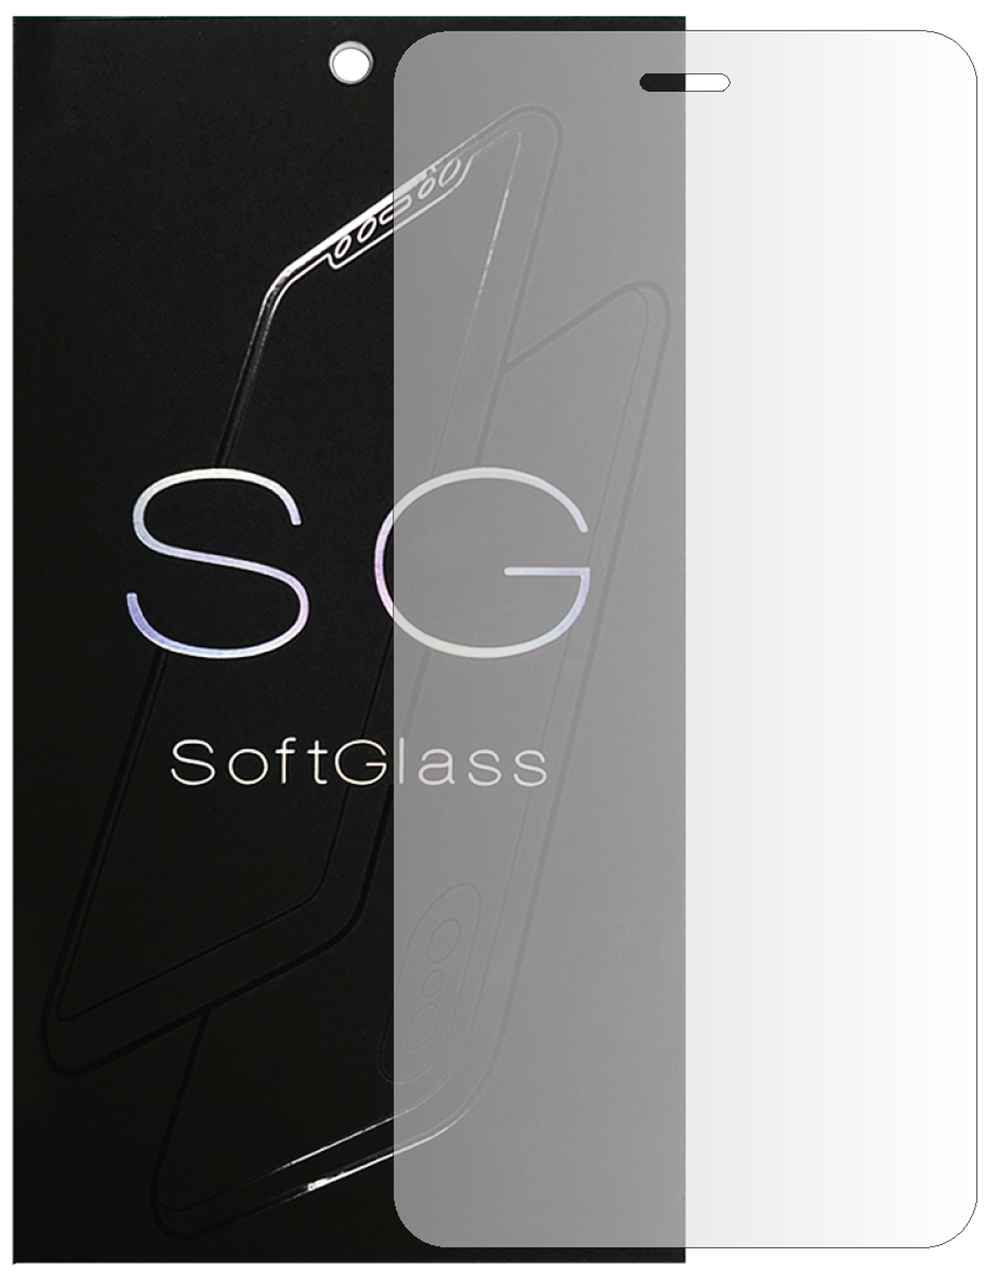 Бронеплівка Huawei P10 lite на екран поліуретанова SoftGlass